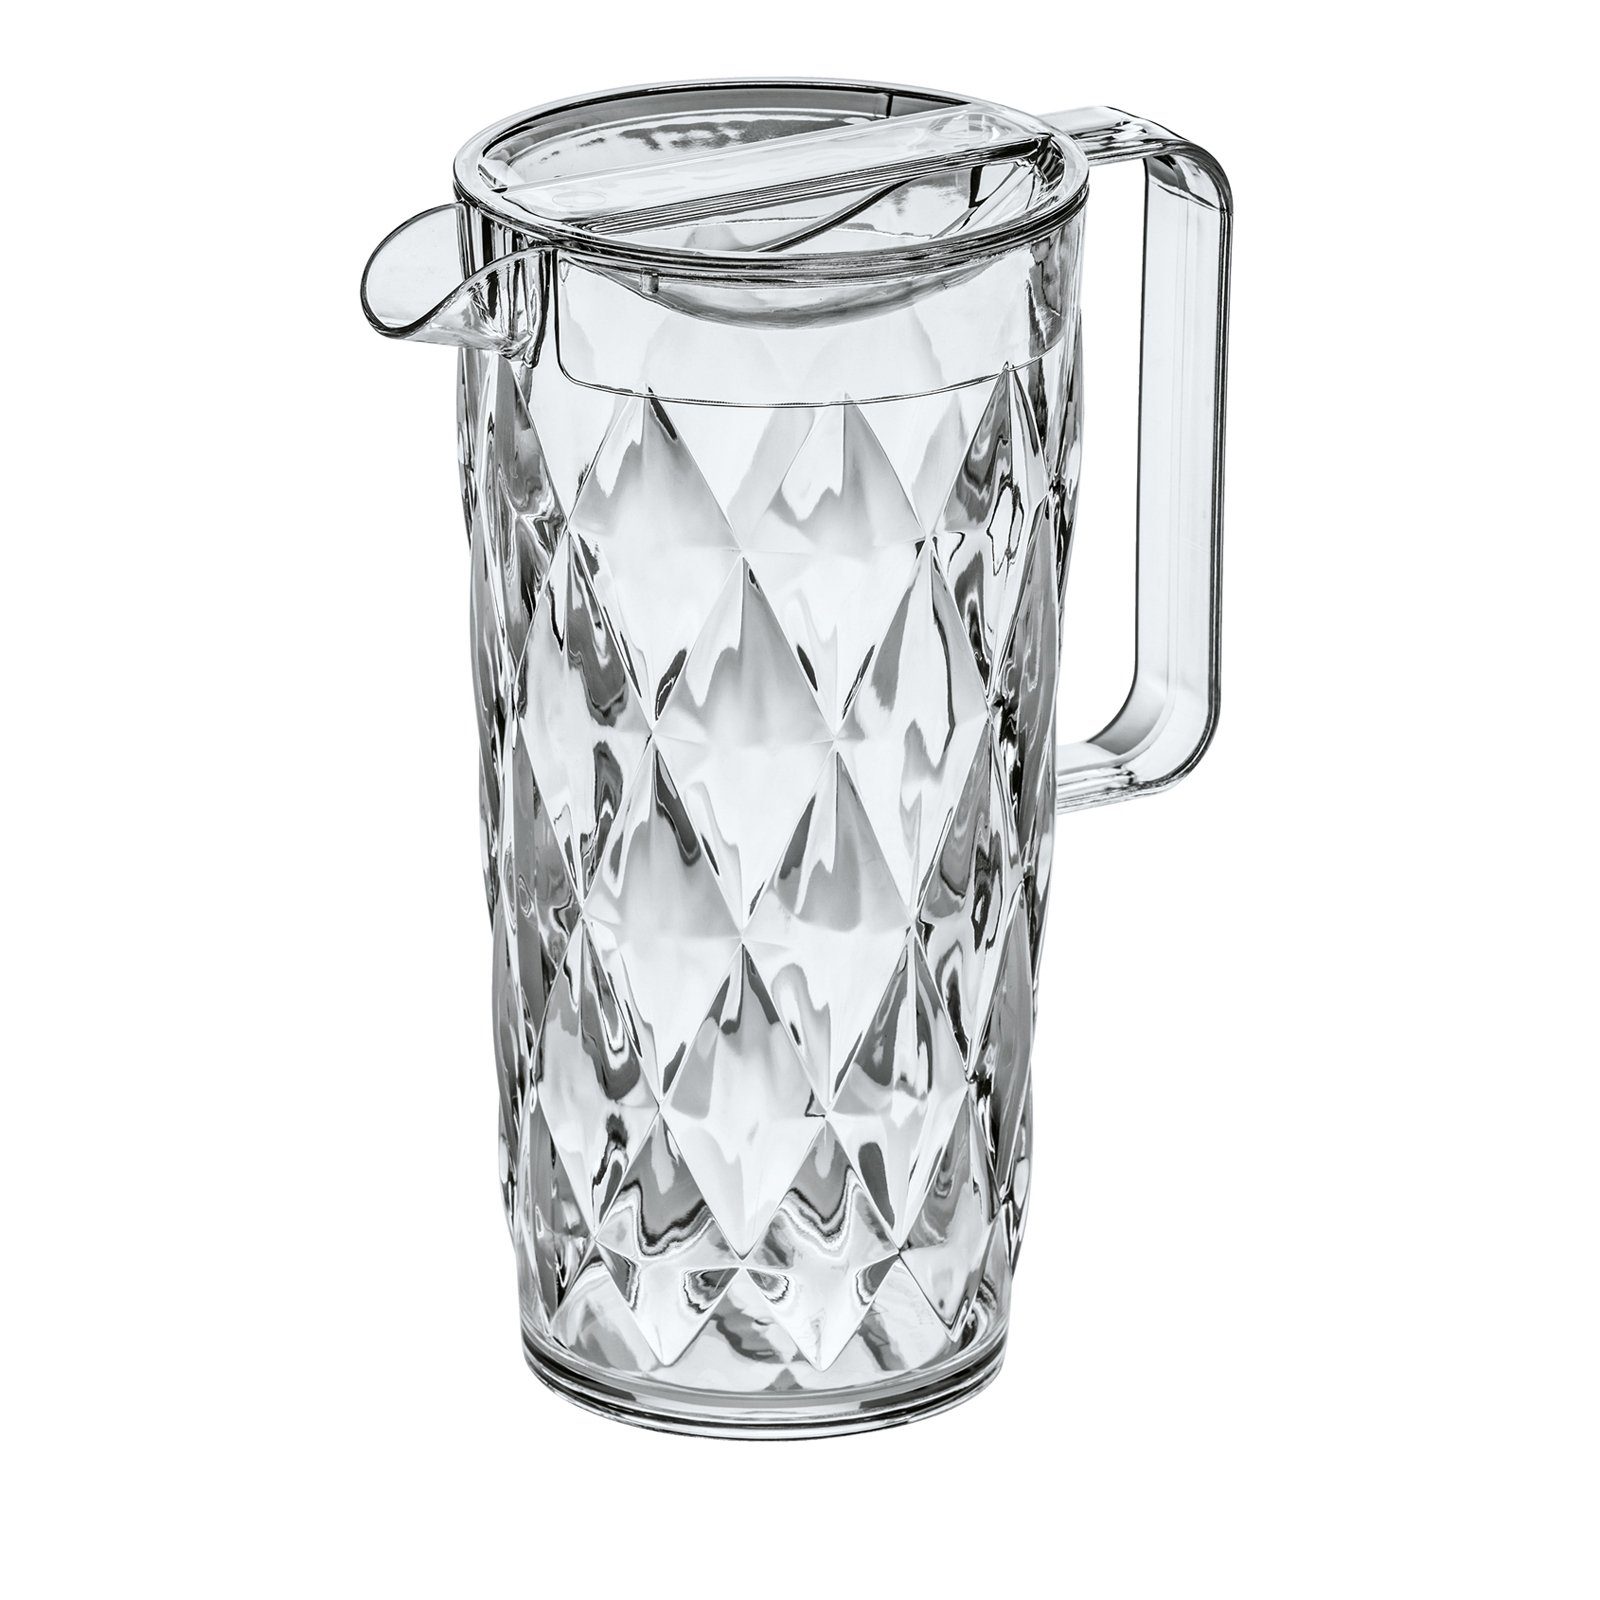 KOZIOL Wasserkaraffe Kanne 1,6 Liter CRYSTAL, (Stück, 1-tlg., 1 Kanne), Krug Karaffe Kunststoff